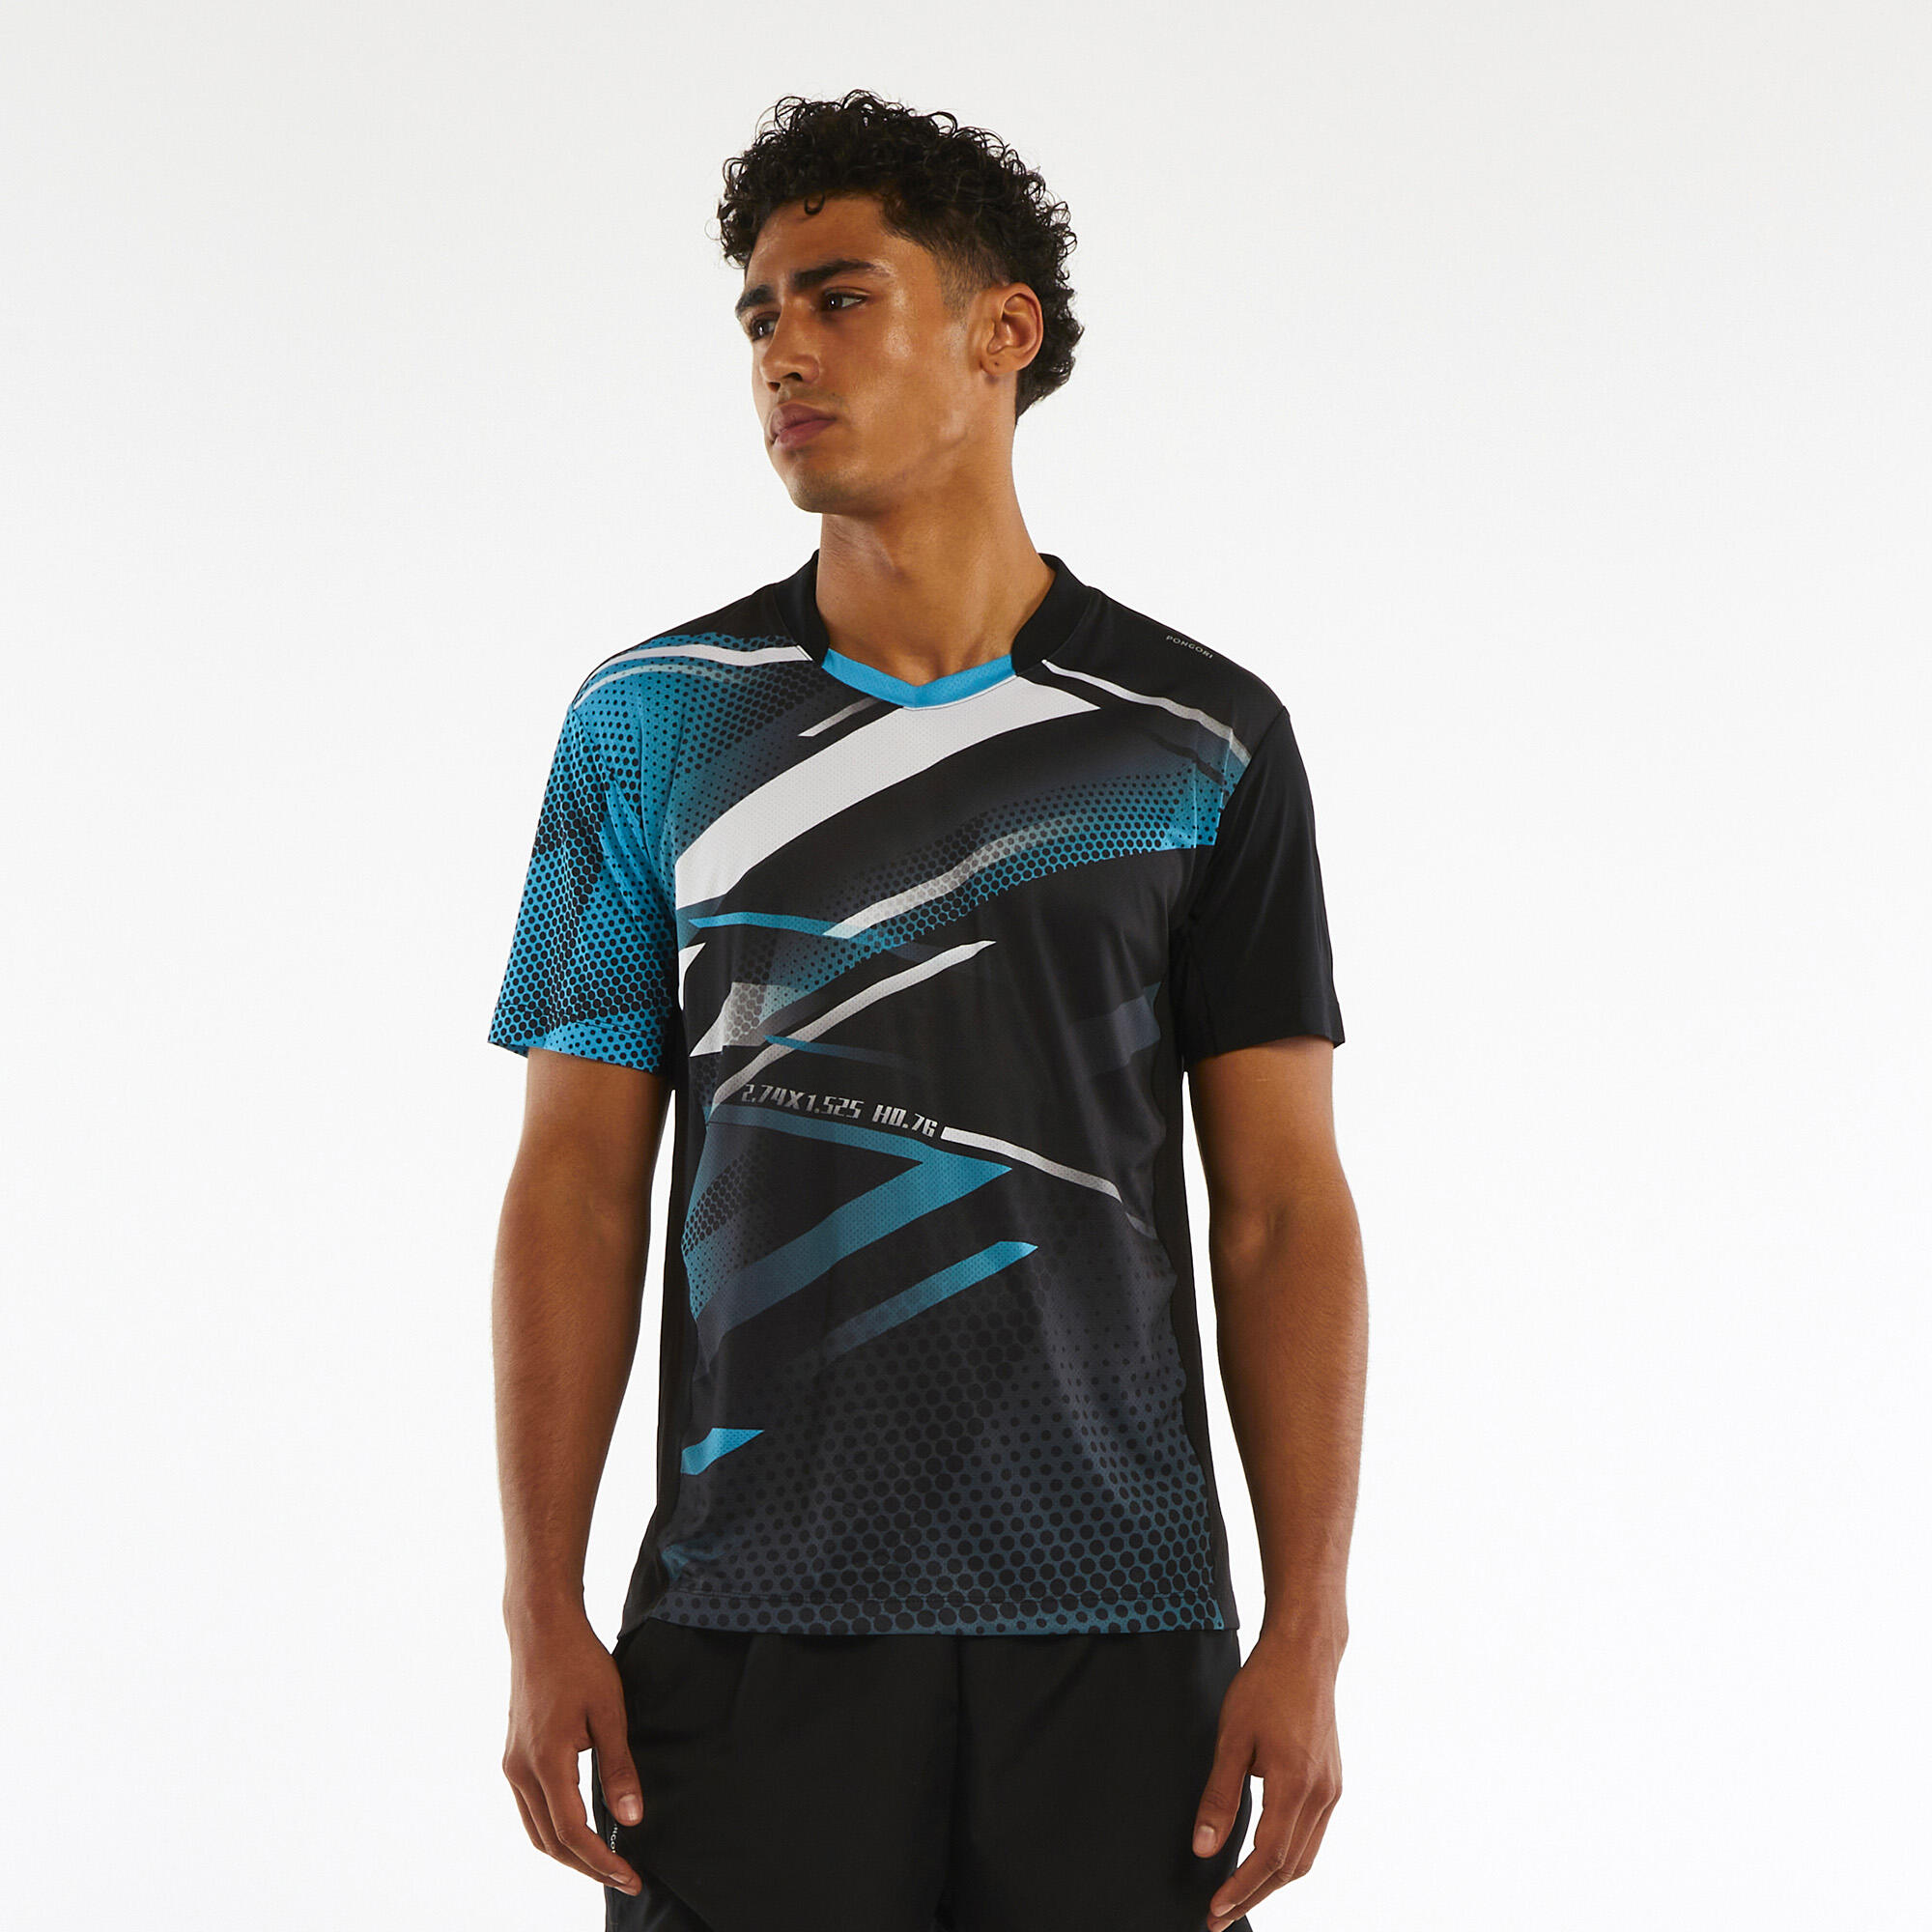 PONGORI Men's Table Tennis T-Shirt TTP560 - Black/Blue